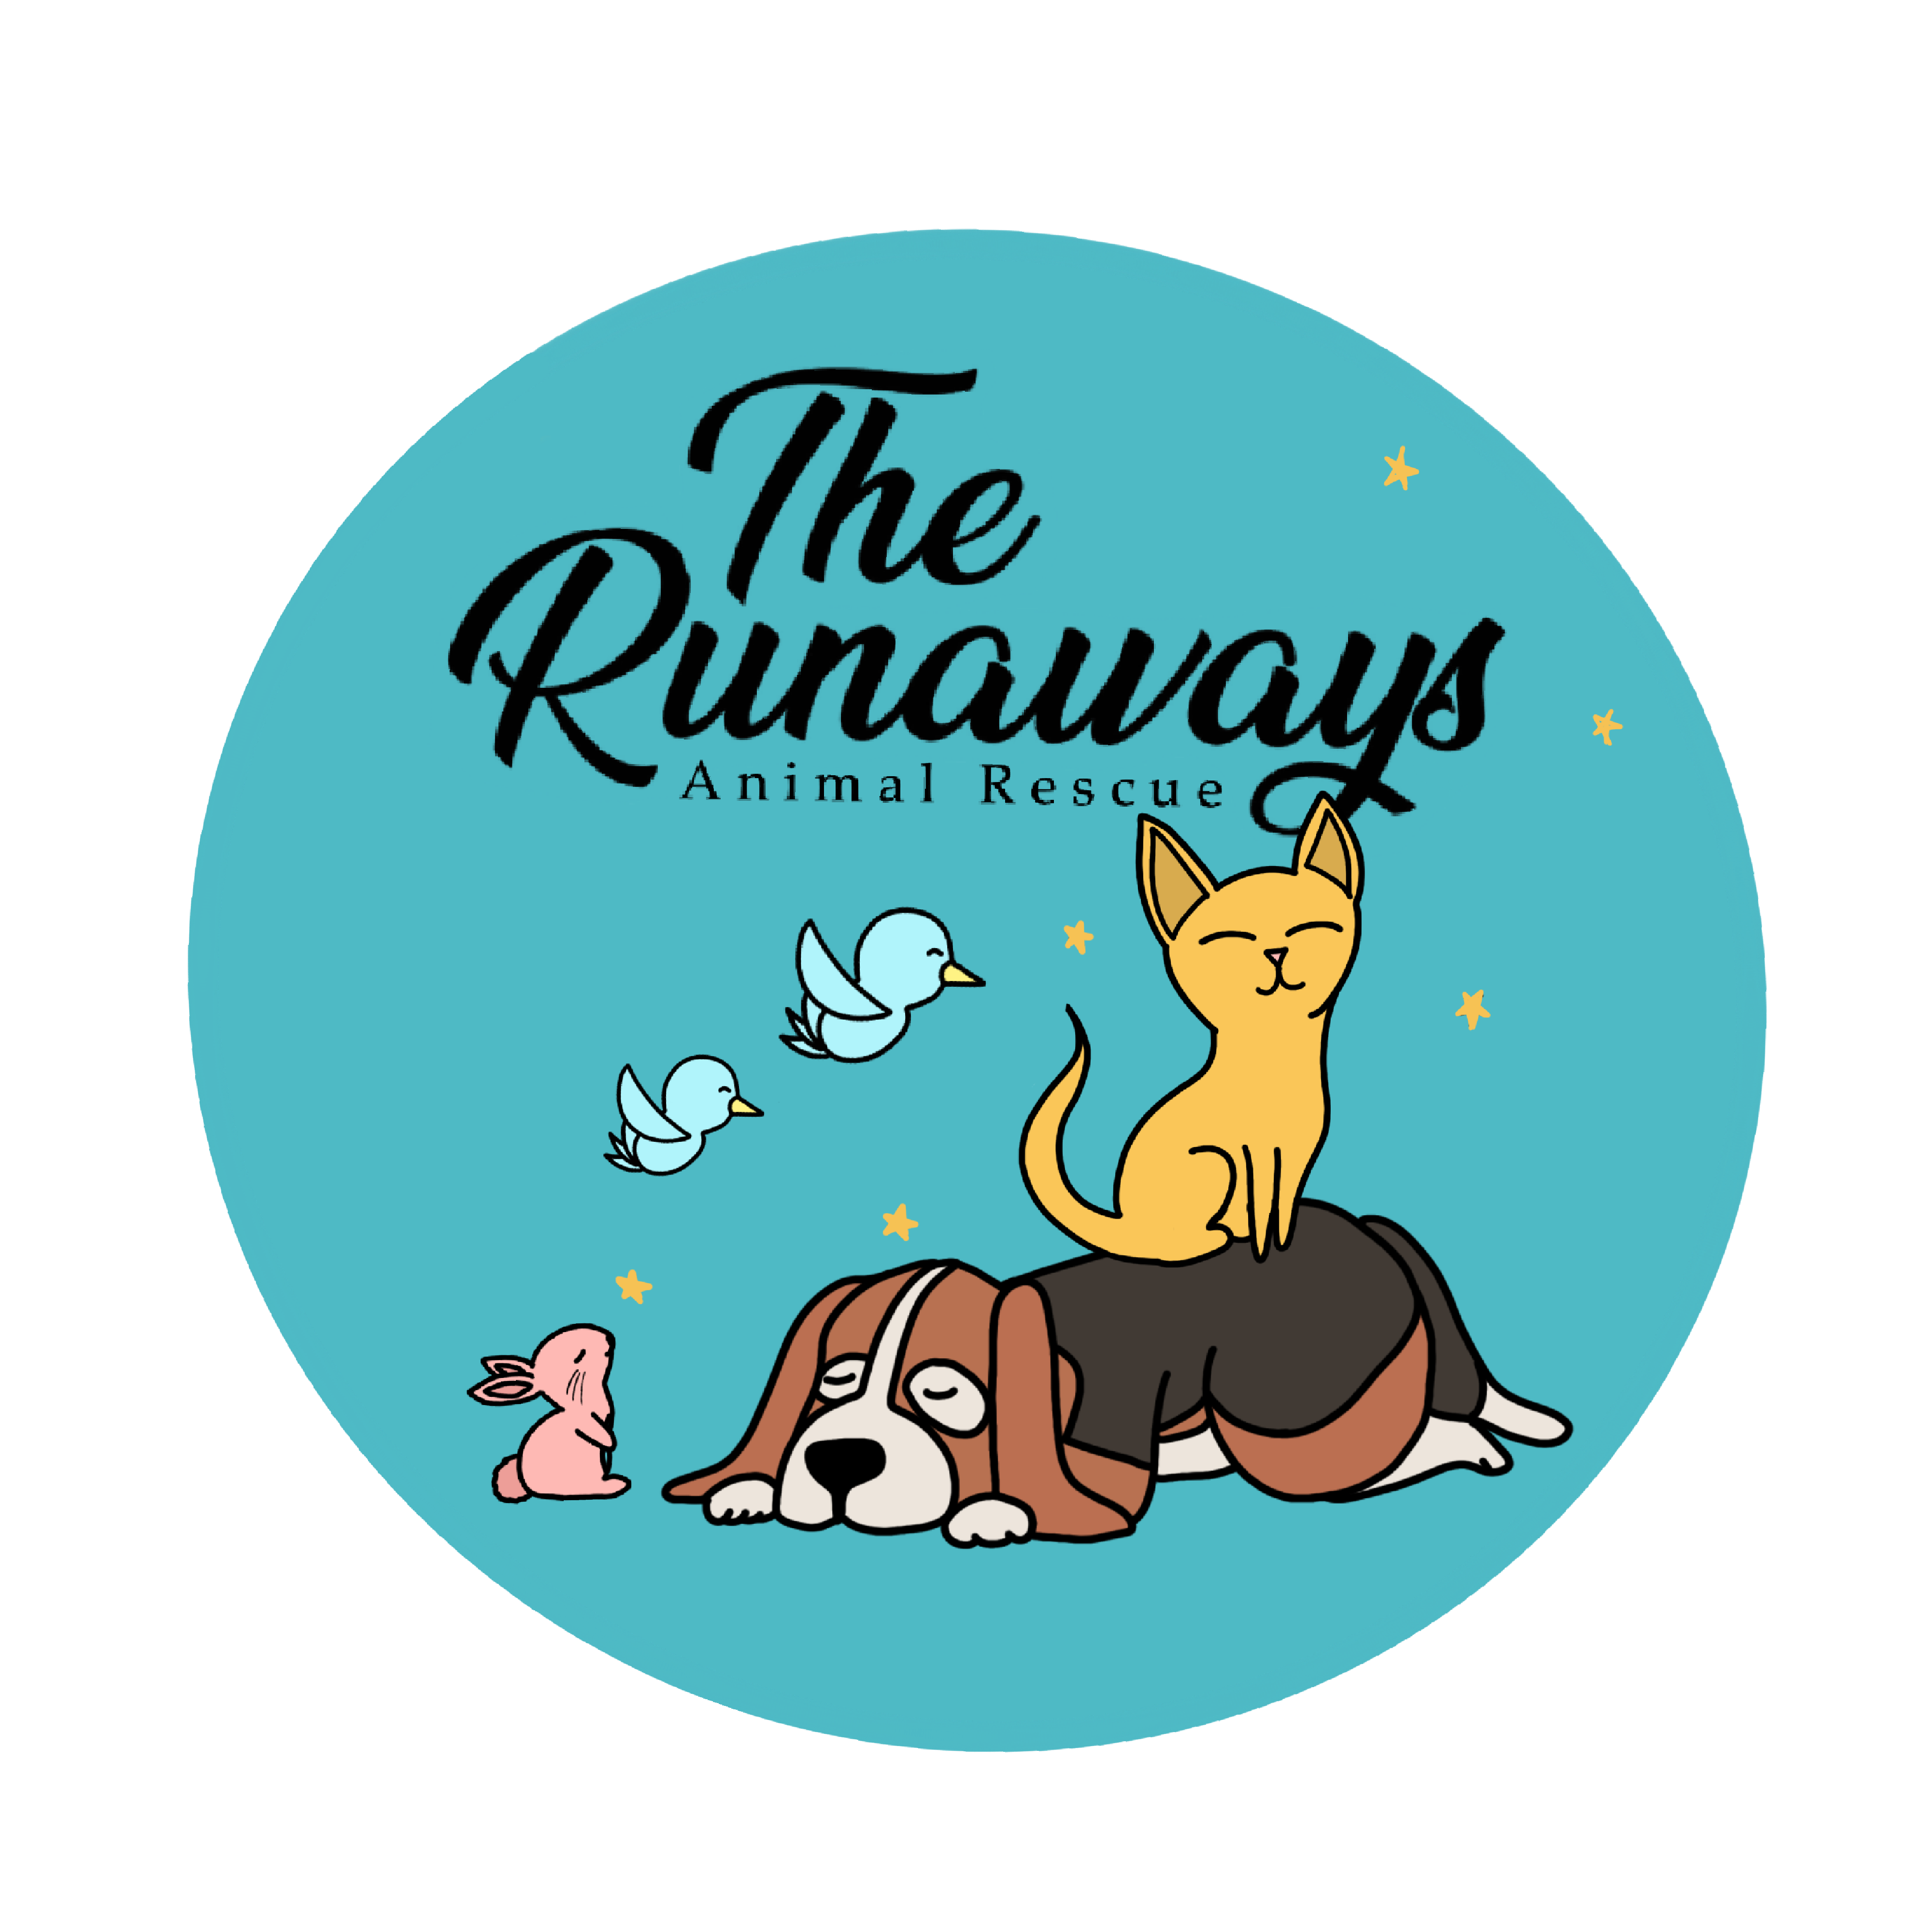 The Runaways Animal Rescue